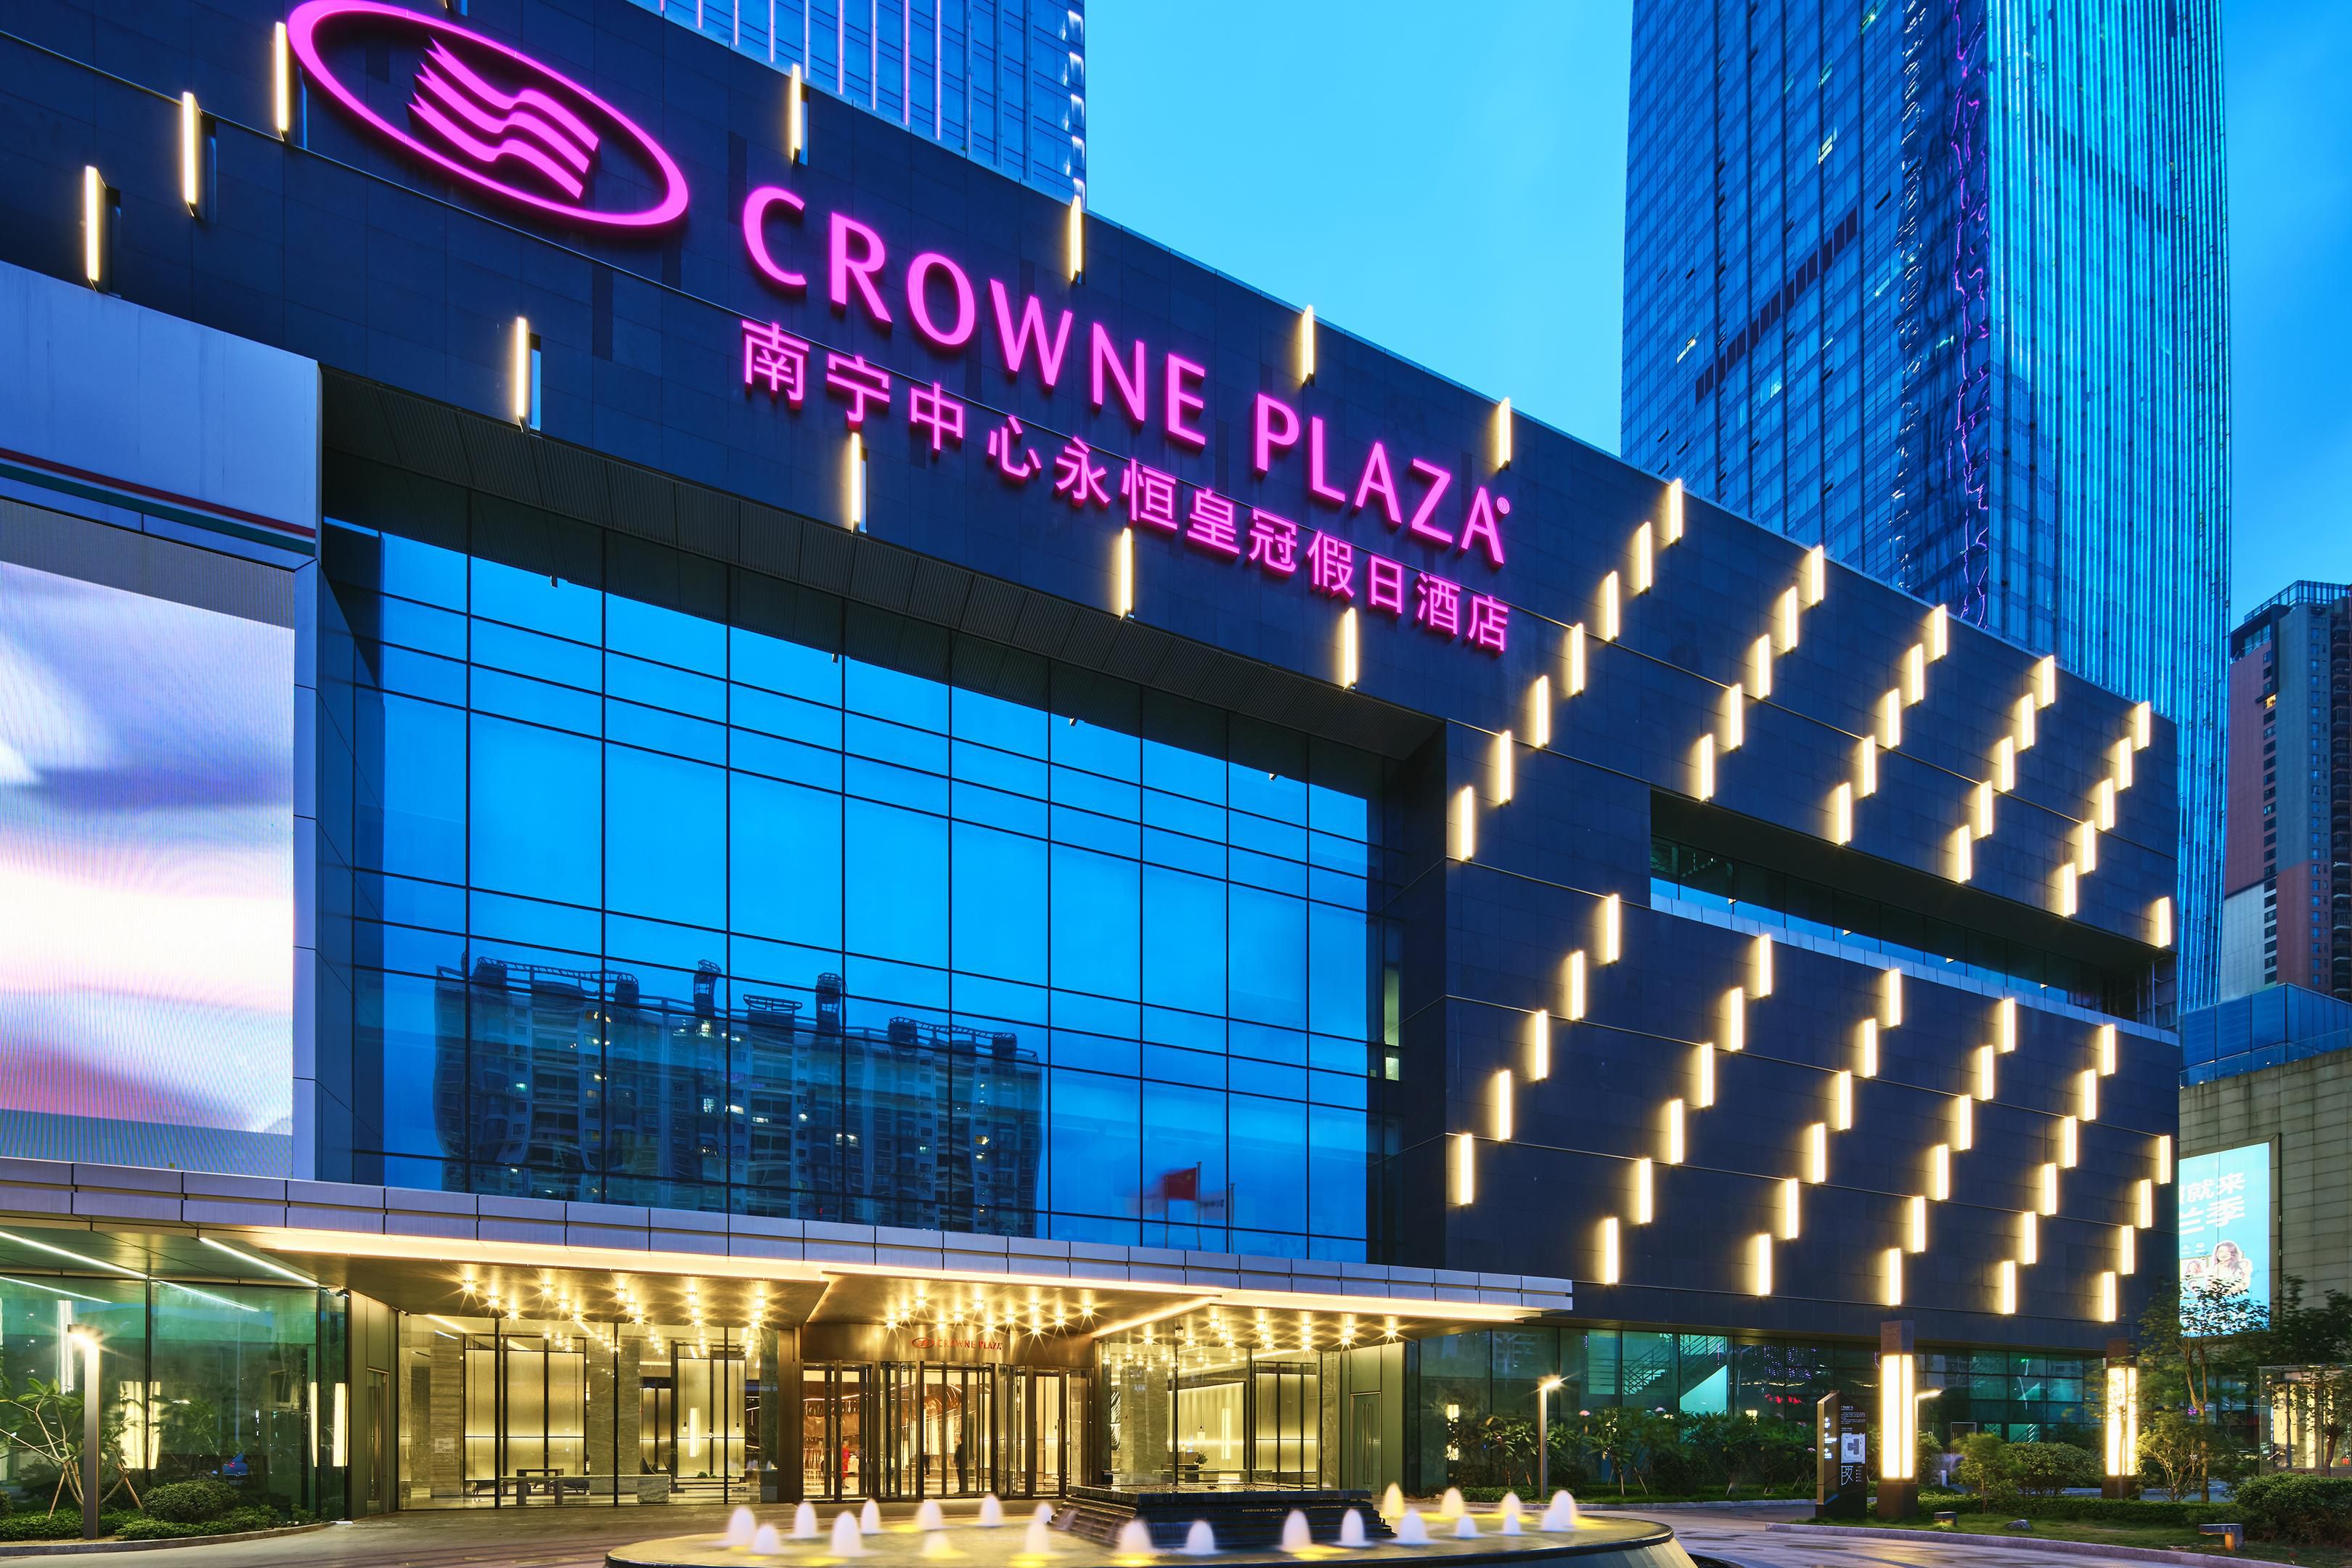 crowne plaza 南宁中心永恒皇冠假日酒店 南宁 中国